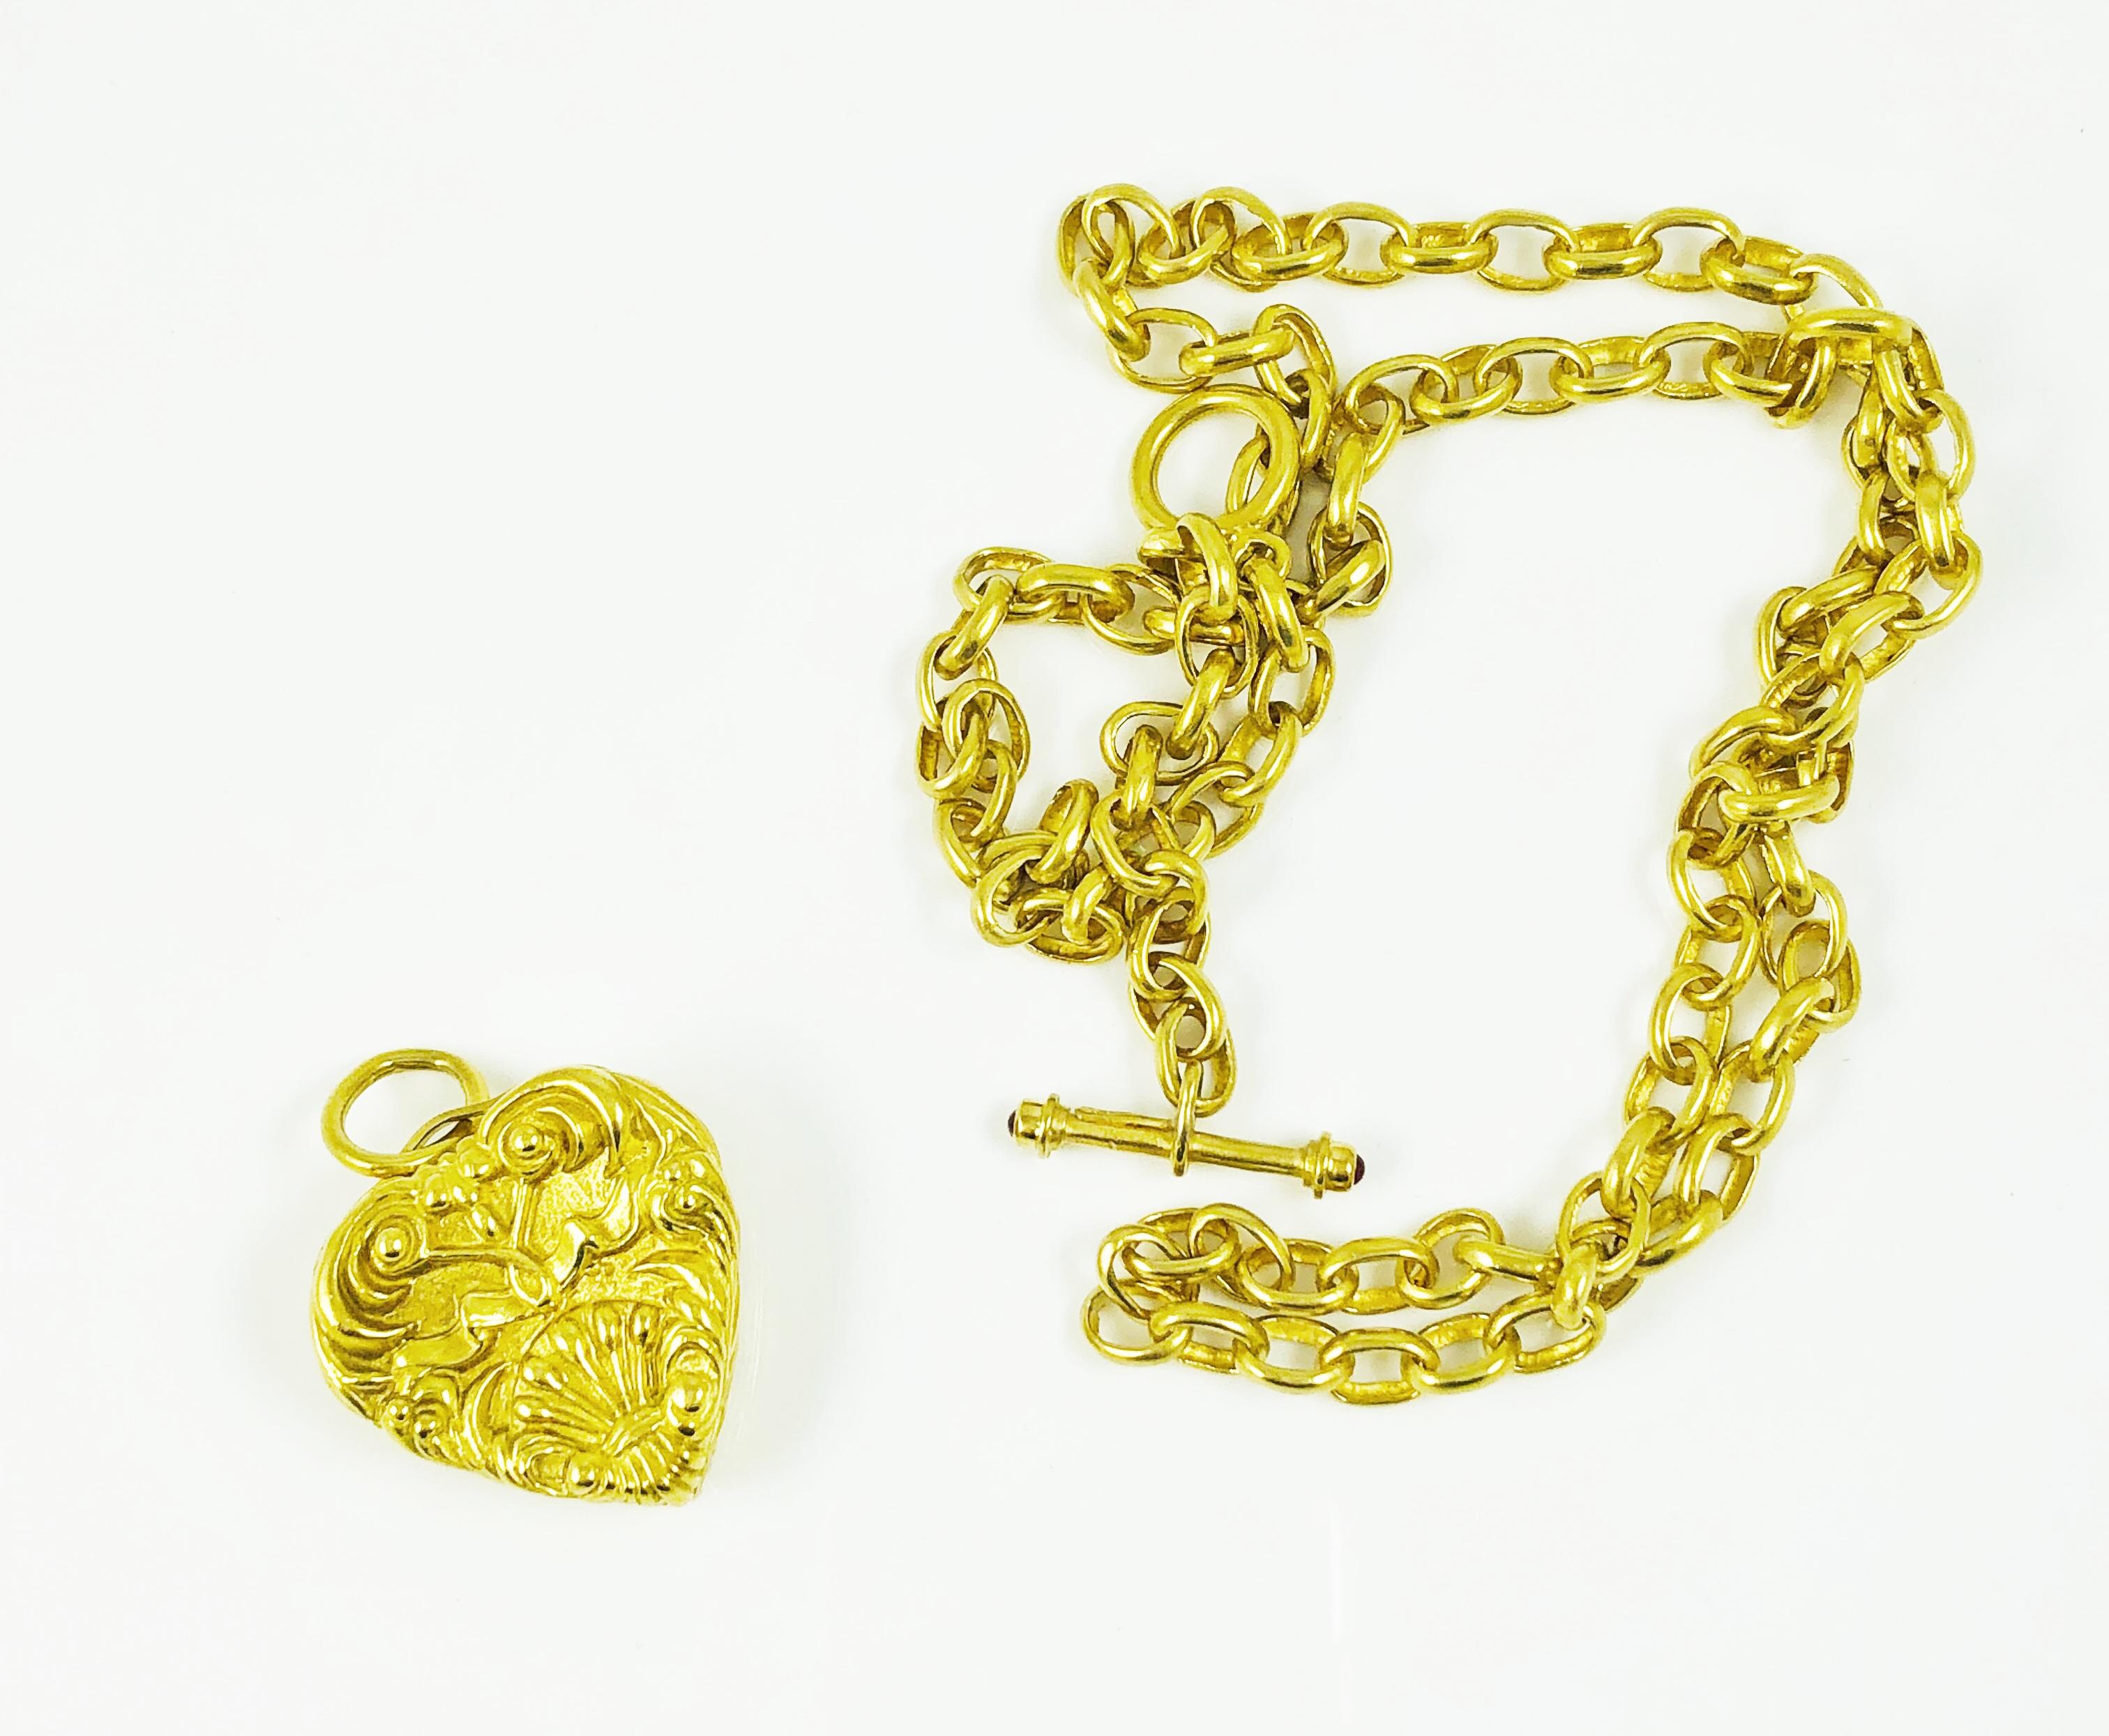 Modern Marlene Stowe 18 Karat Yellow Gold Heart Pendant and Link Chain